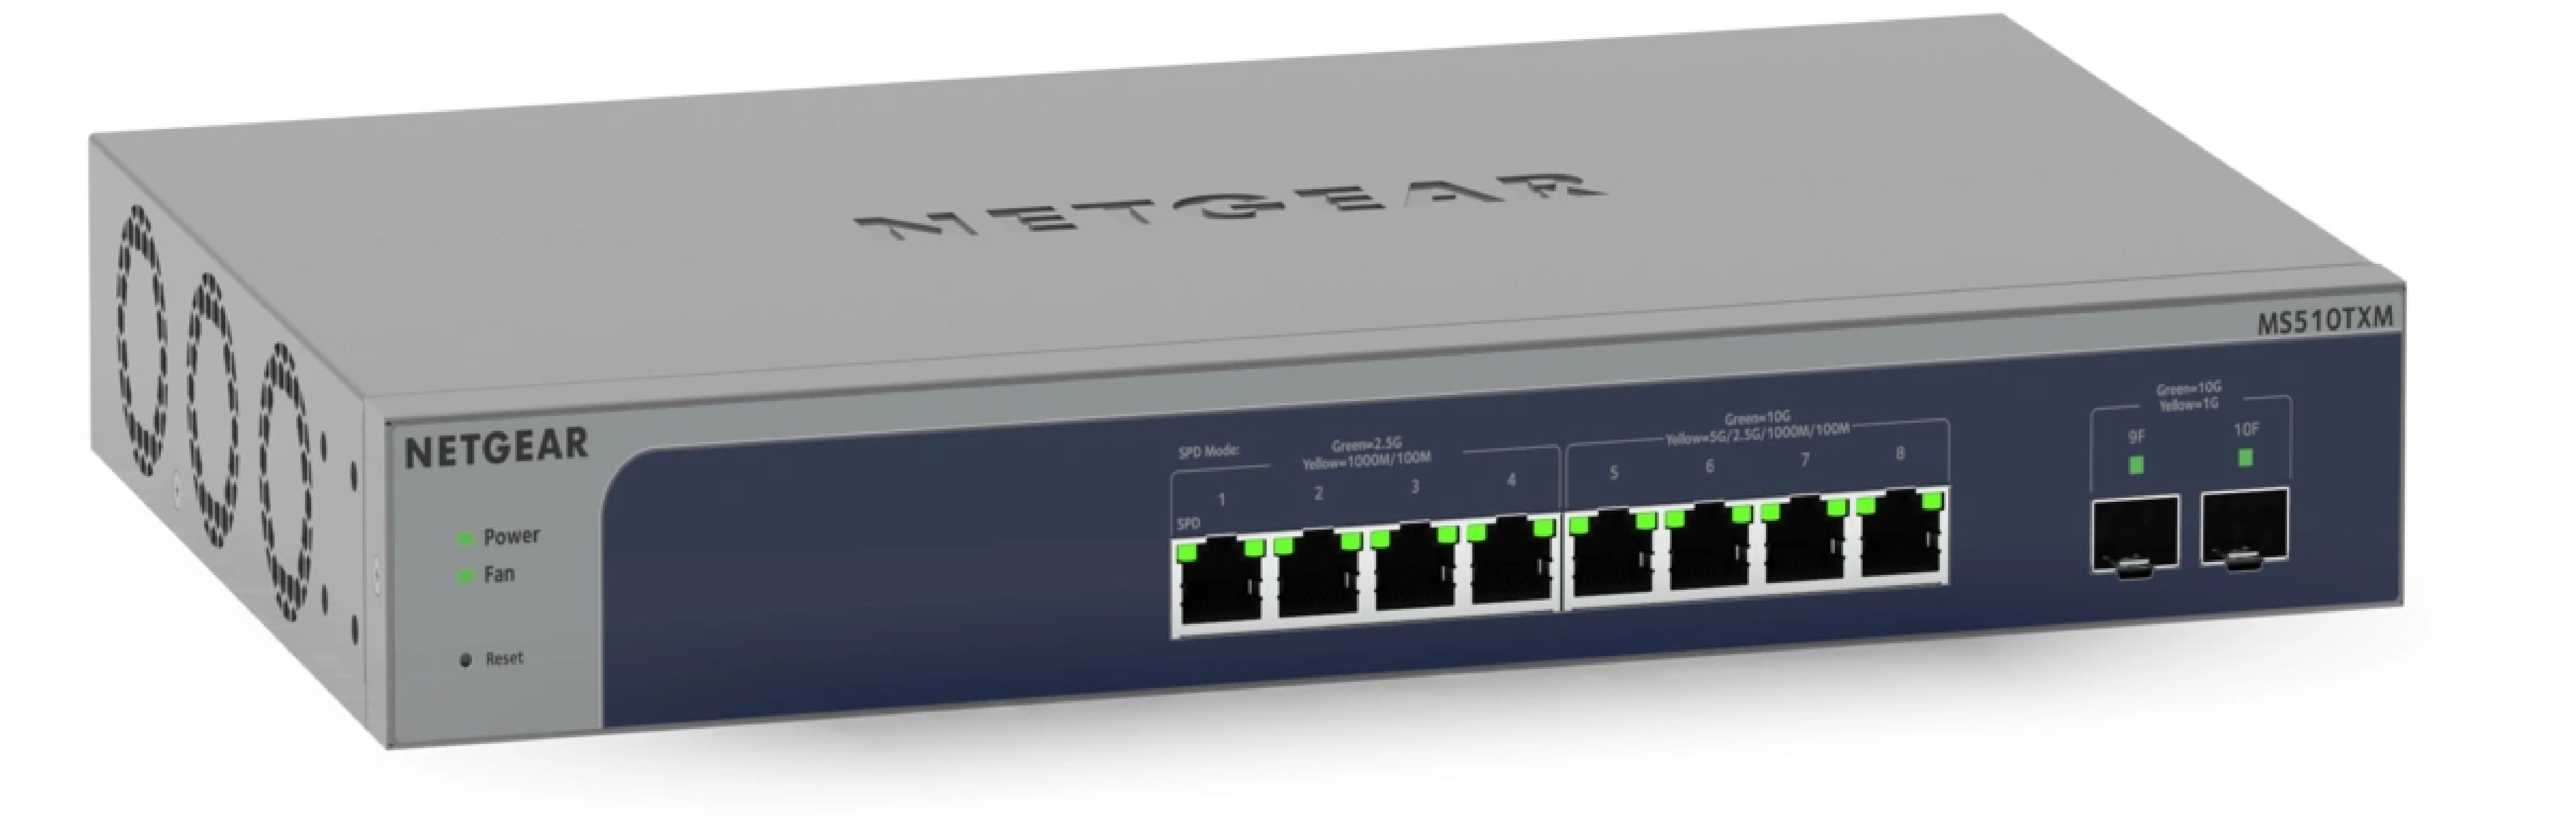 Netgear 10Port Switch 8-Port Multi-Gigabit/10G Ethernet Smart Managed MS510TXM